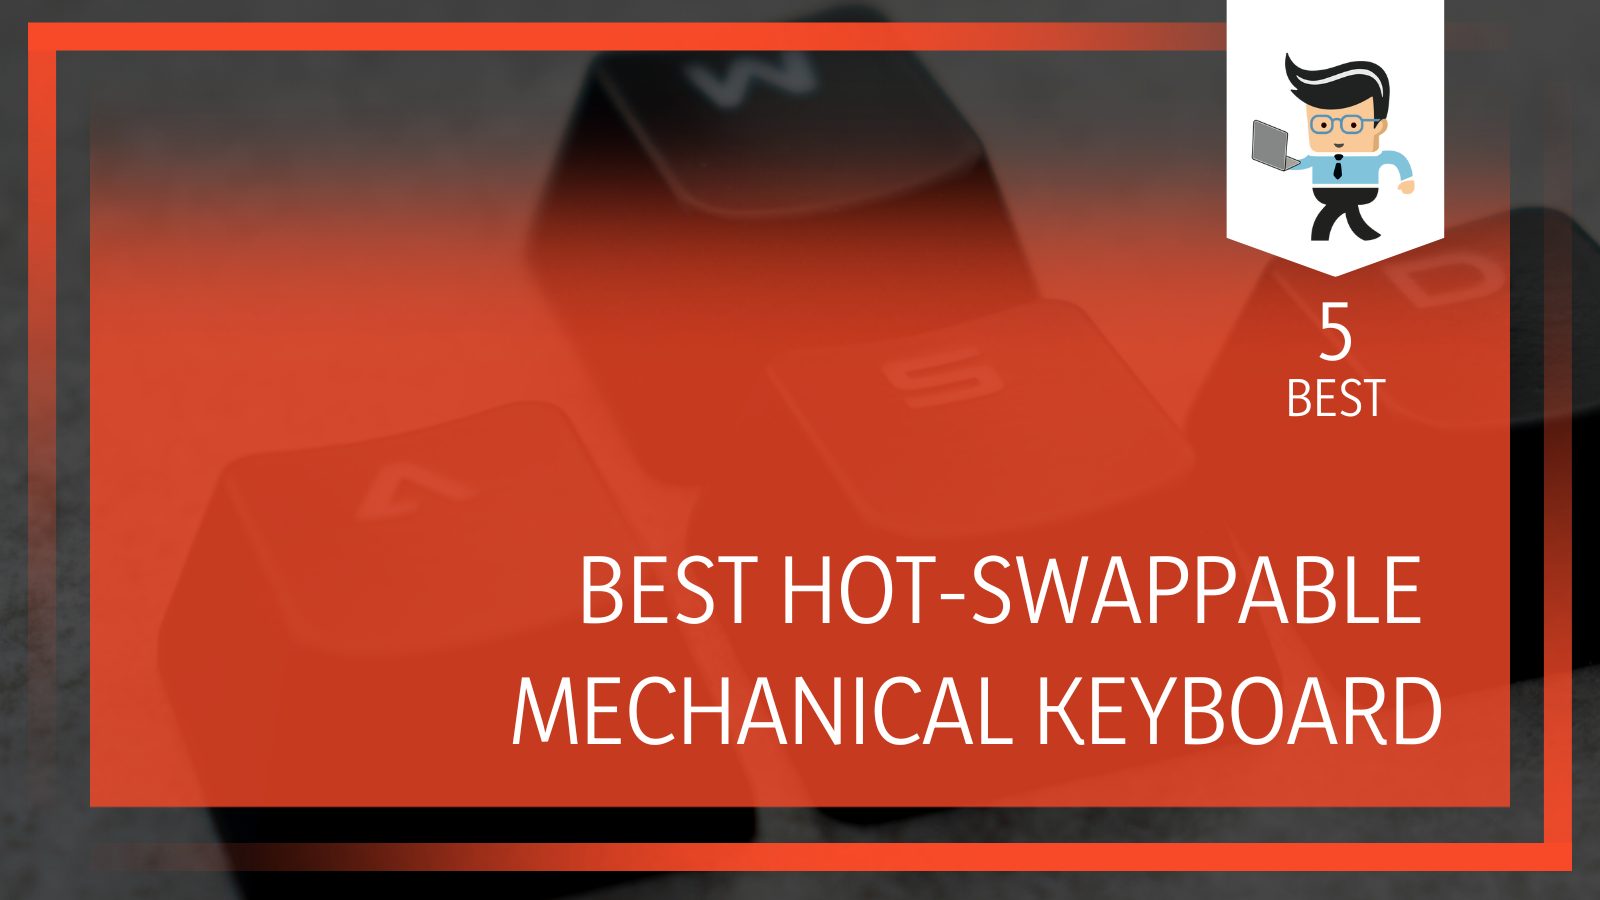 Swappabe Mechanical Keyboard